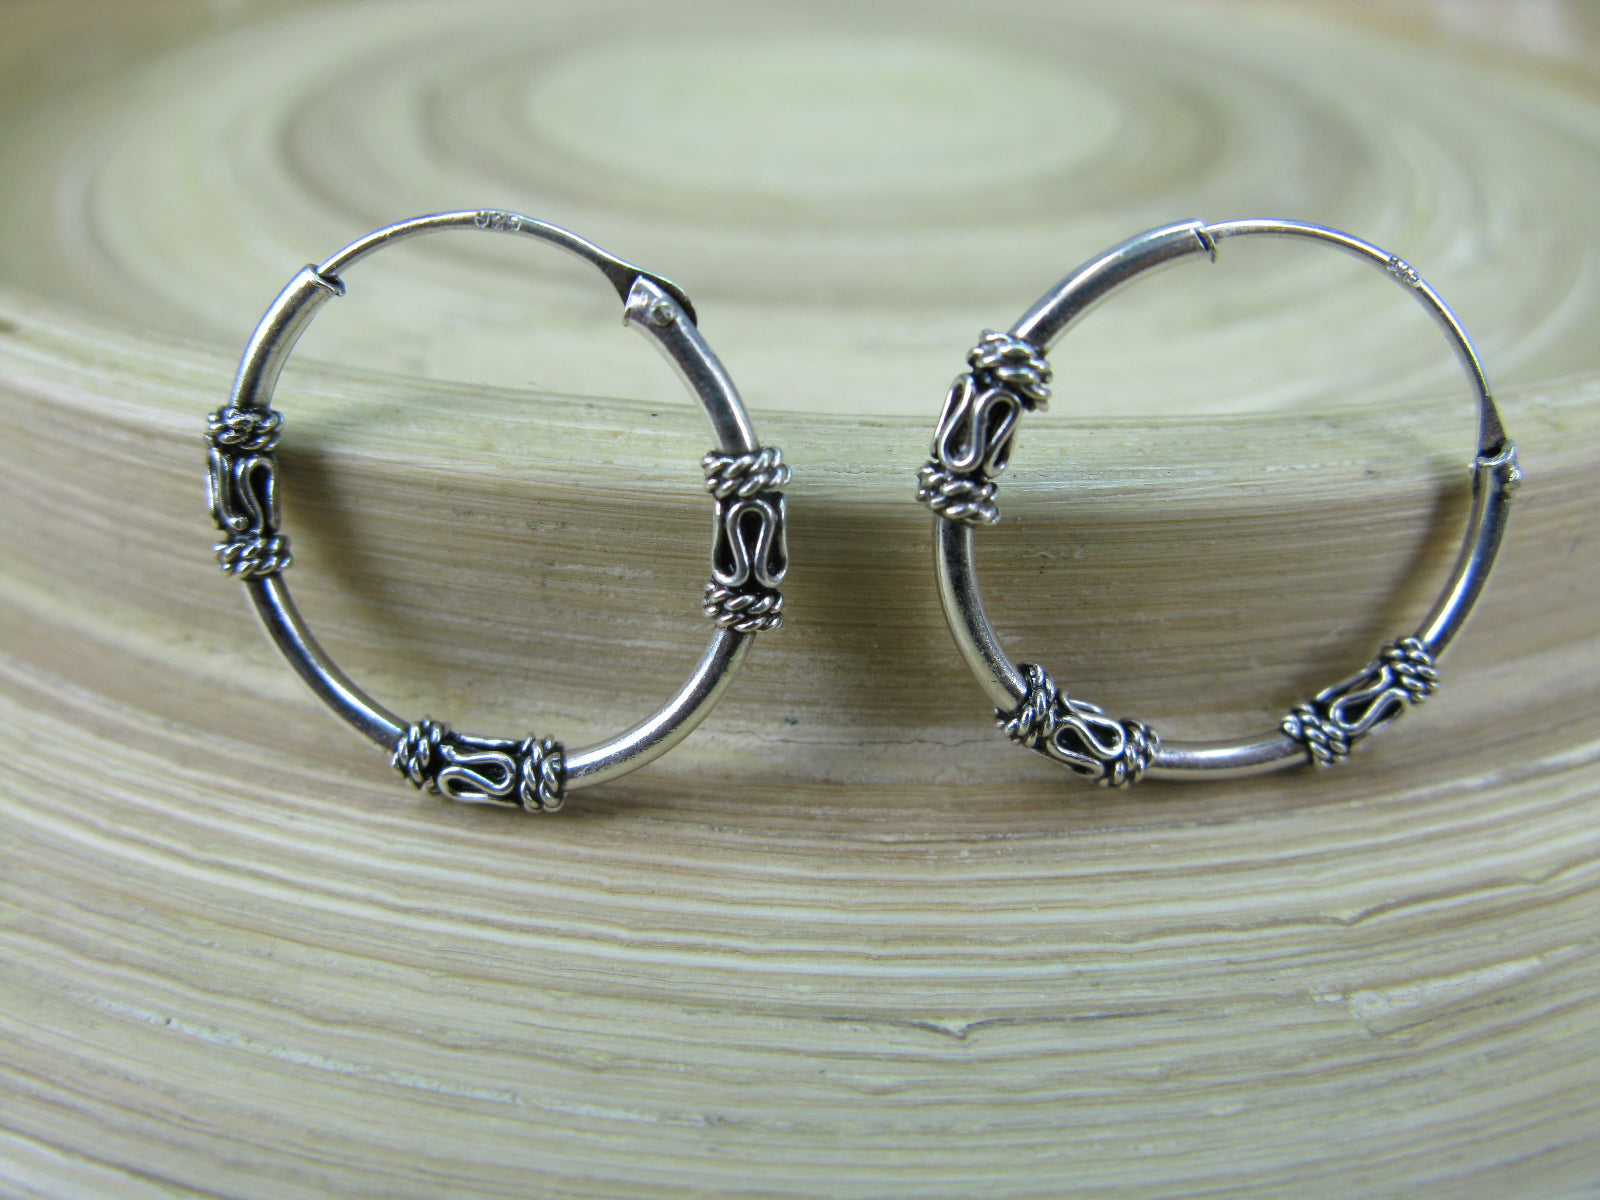 18mm Balinese Oxidized Hoop Earrings in 925 Sterling Silver